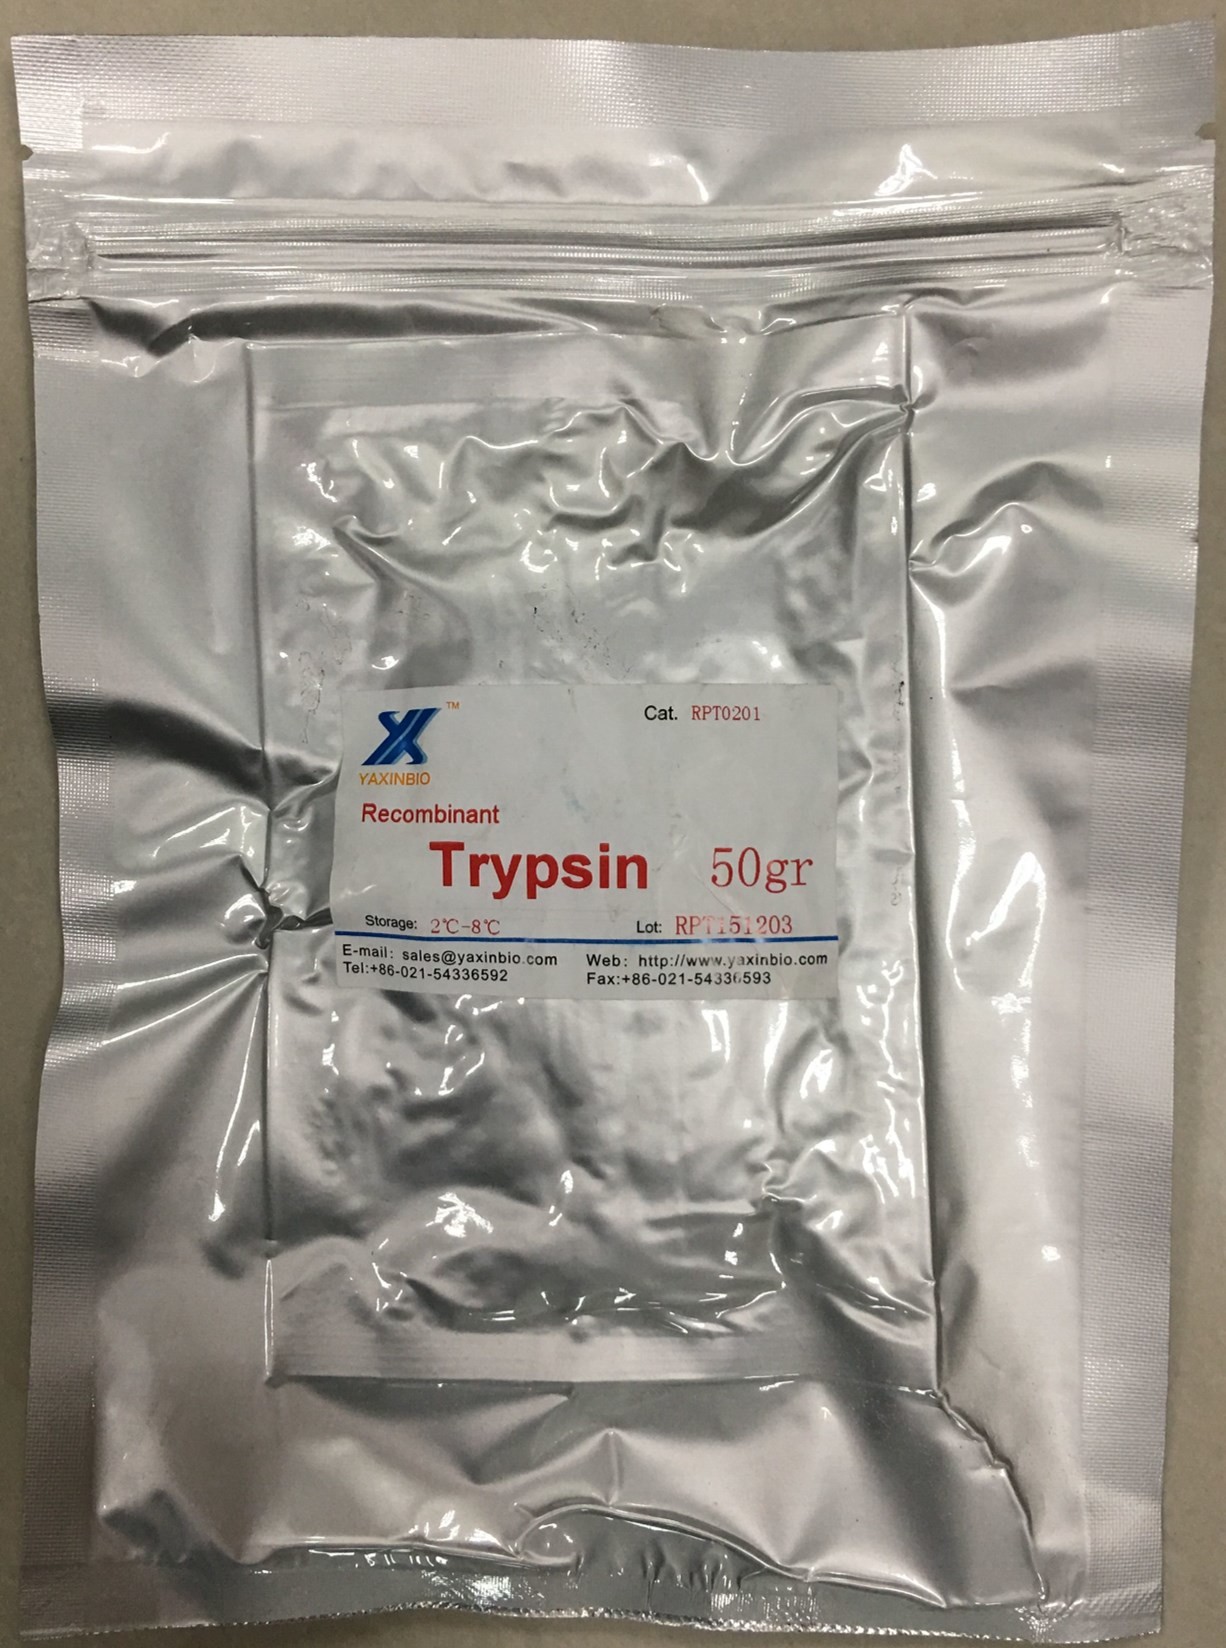 Quality Yellowish Lyophilized Powder, Yaxinbio Recombinant Porcine Trypsin, CAS 9002-07-7 for sale